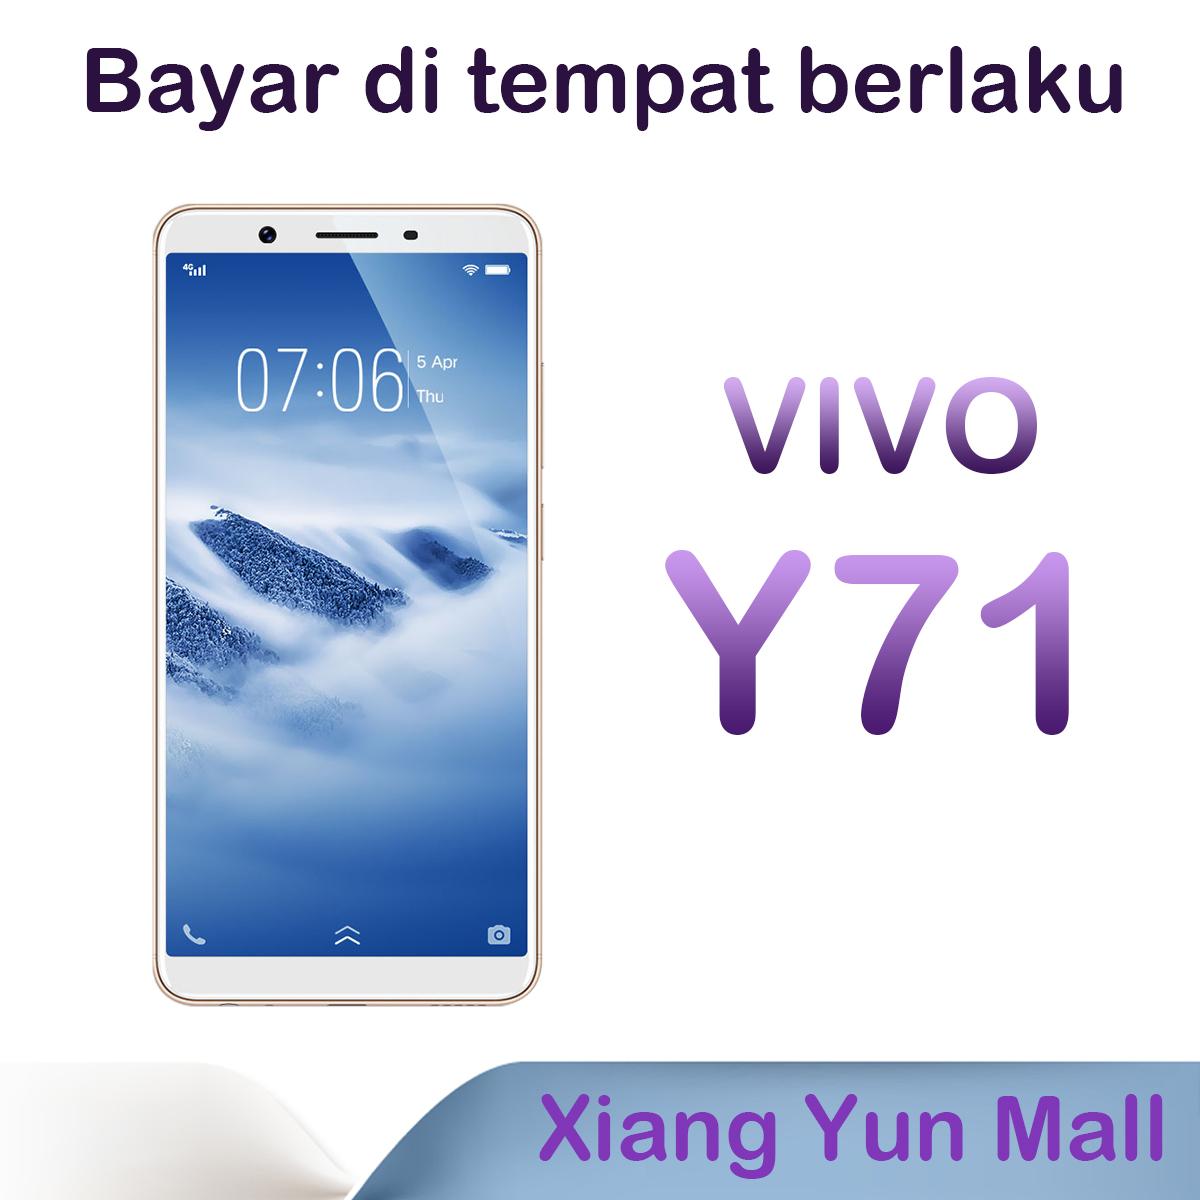 VIVO Y71 2GB/16GB - Smartphone 4G Garansi Resmi